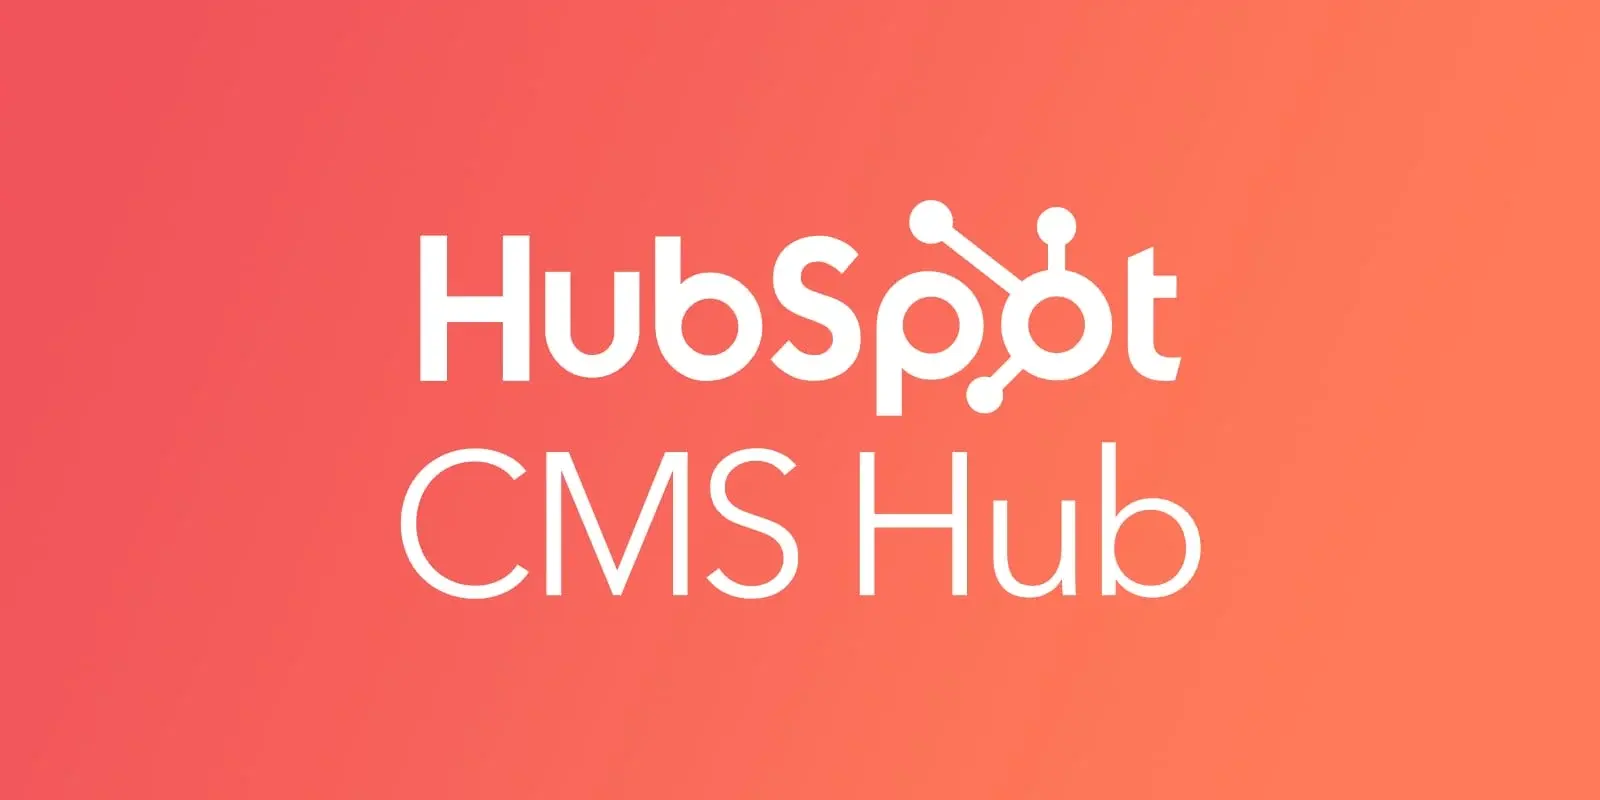 hubspot-cms-hub-1